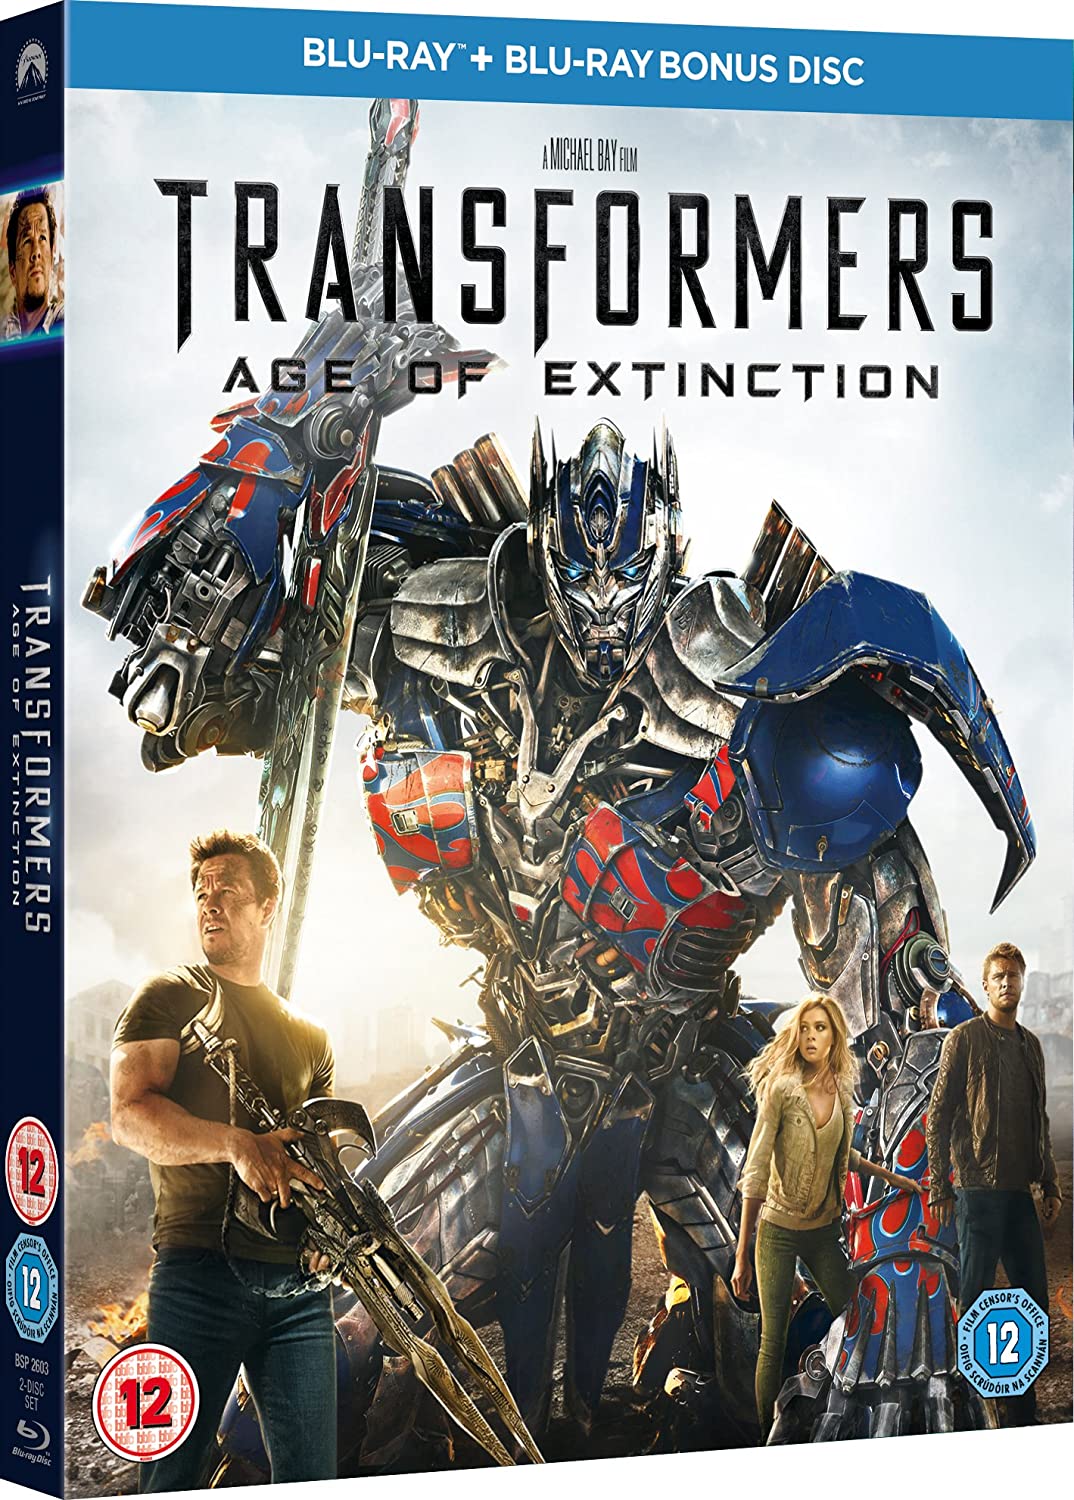 Transformers: Age of Extinction [Blu-ray + Bonus Disc] [Regio vrij]